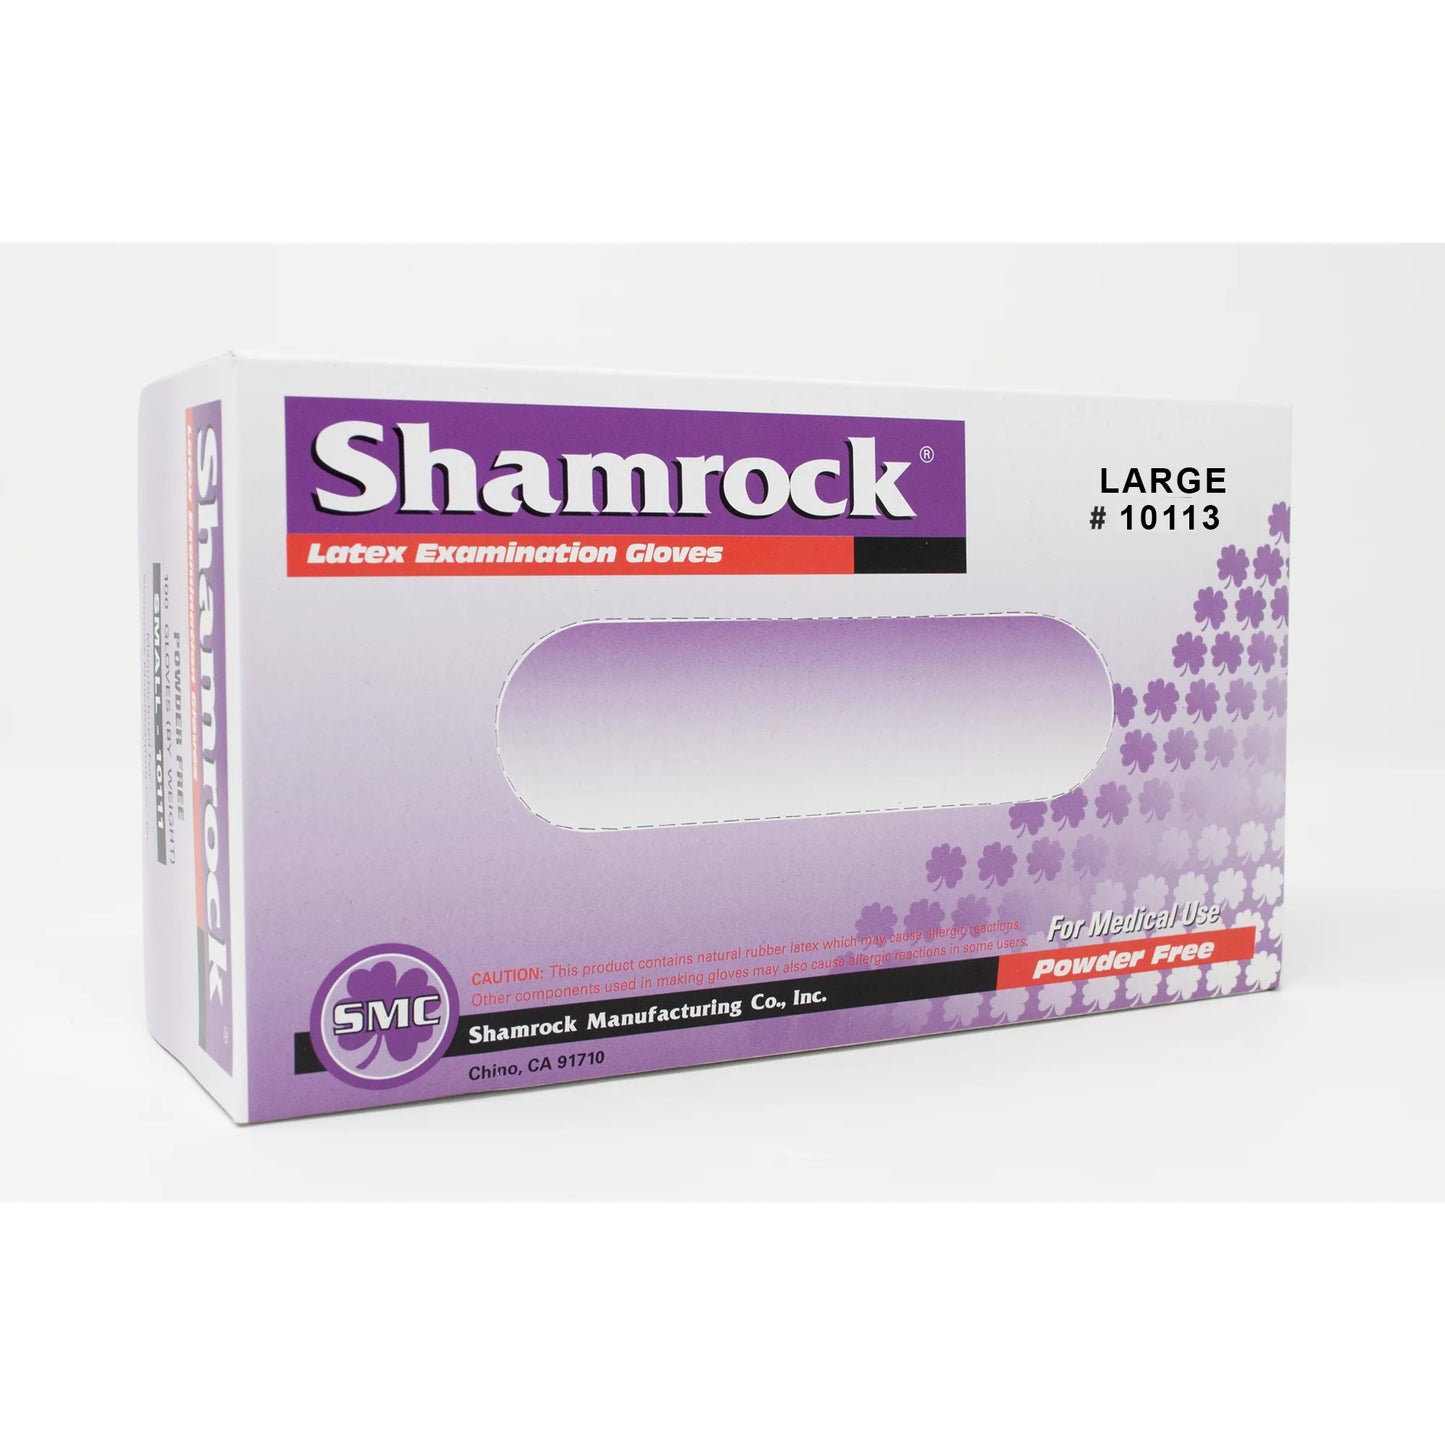 Shamrock - Powder Free Textured Latex medical Examination Gloves - Size L, Pack of 500 Gloves